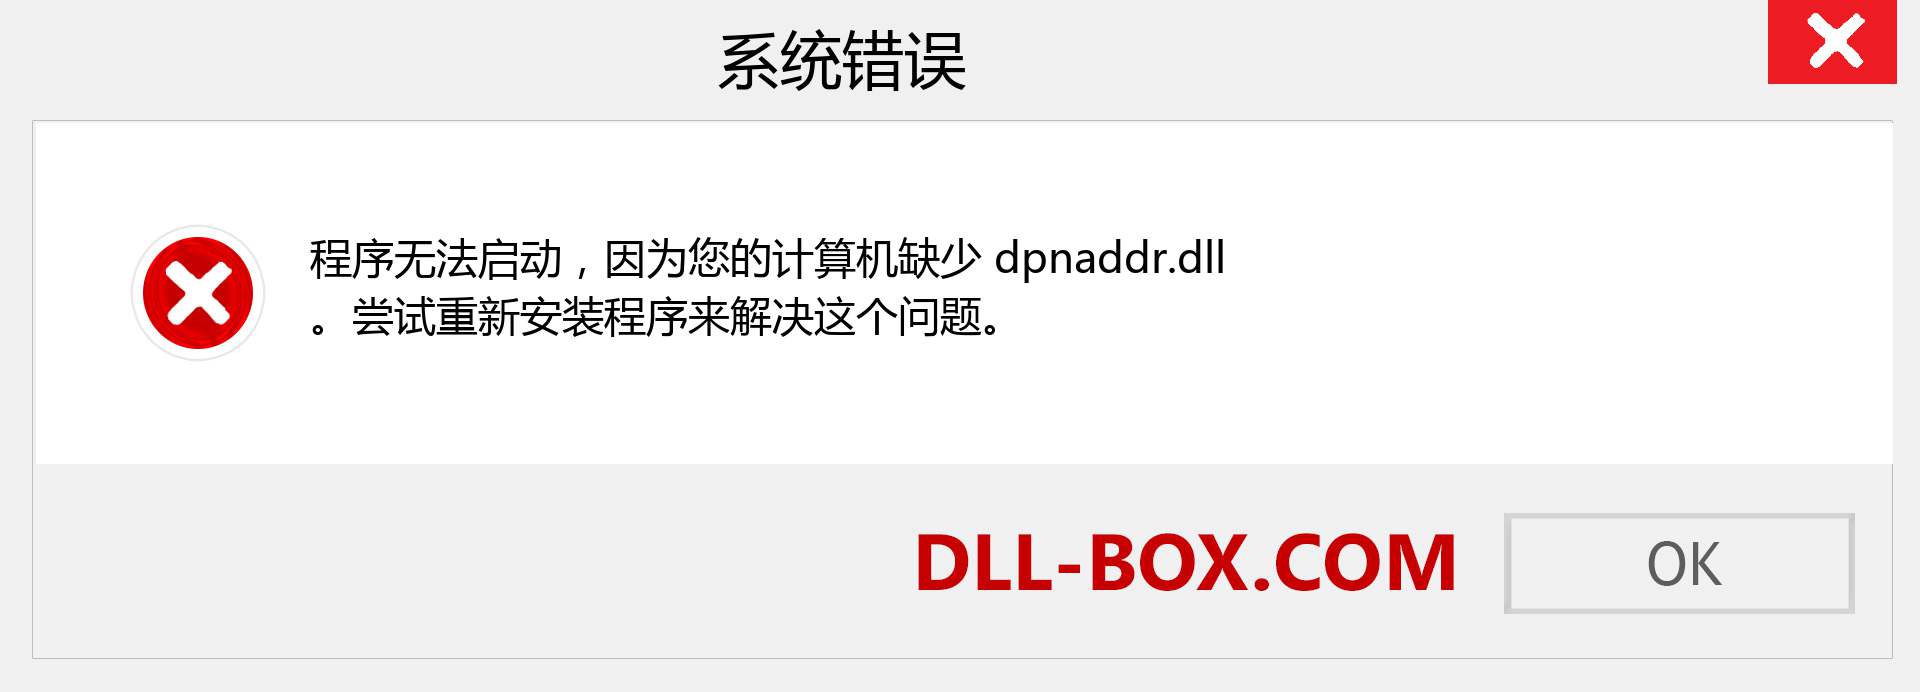 dpnaddr.dll 文件丢失？。 适用于 Windows 7、8、10 的下载 - 修复 Windows、照片、图像上的 dpnaddr dll 丢失错误